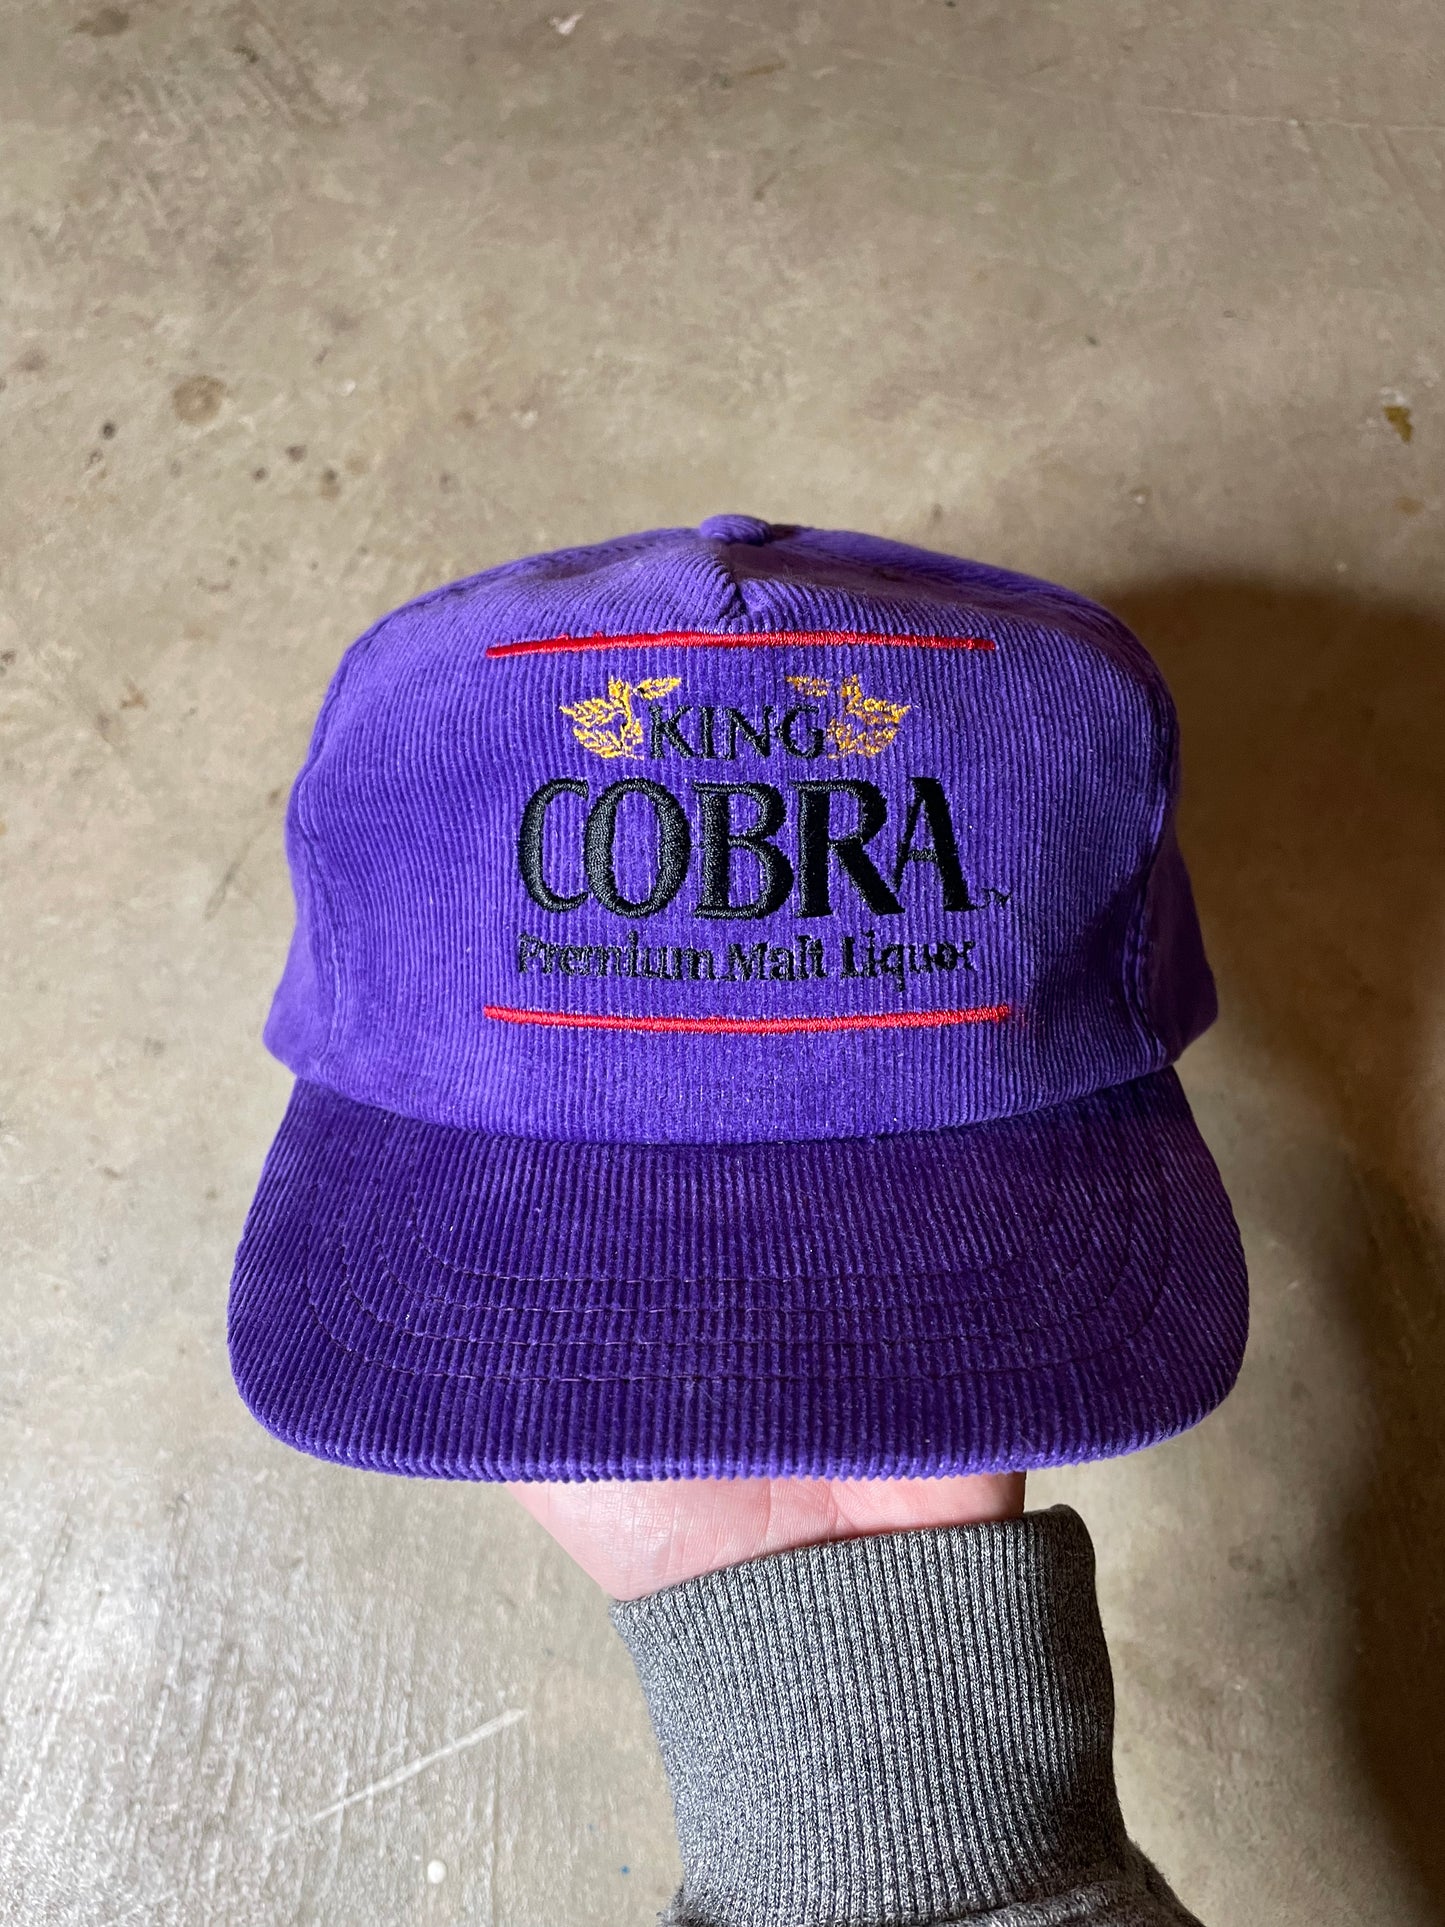 Vintage King Cobra Malt Liquor Hat